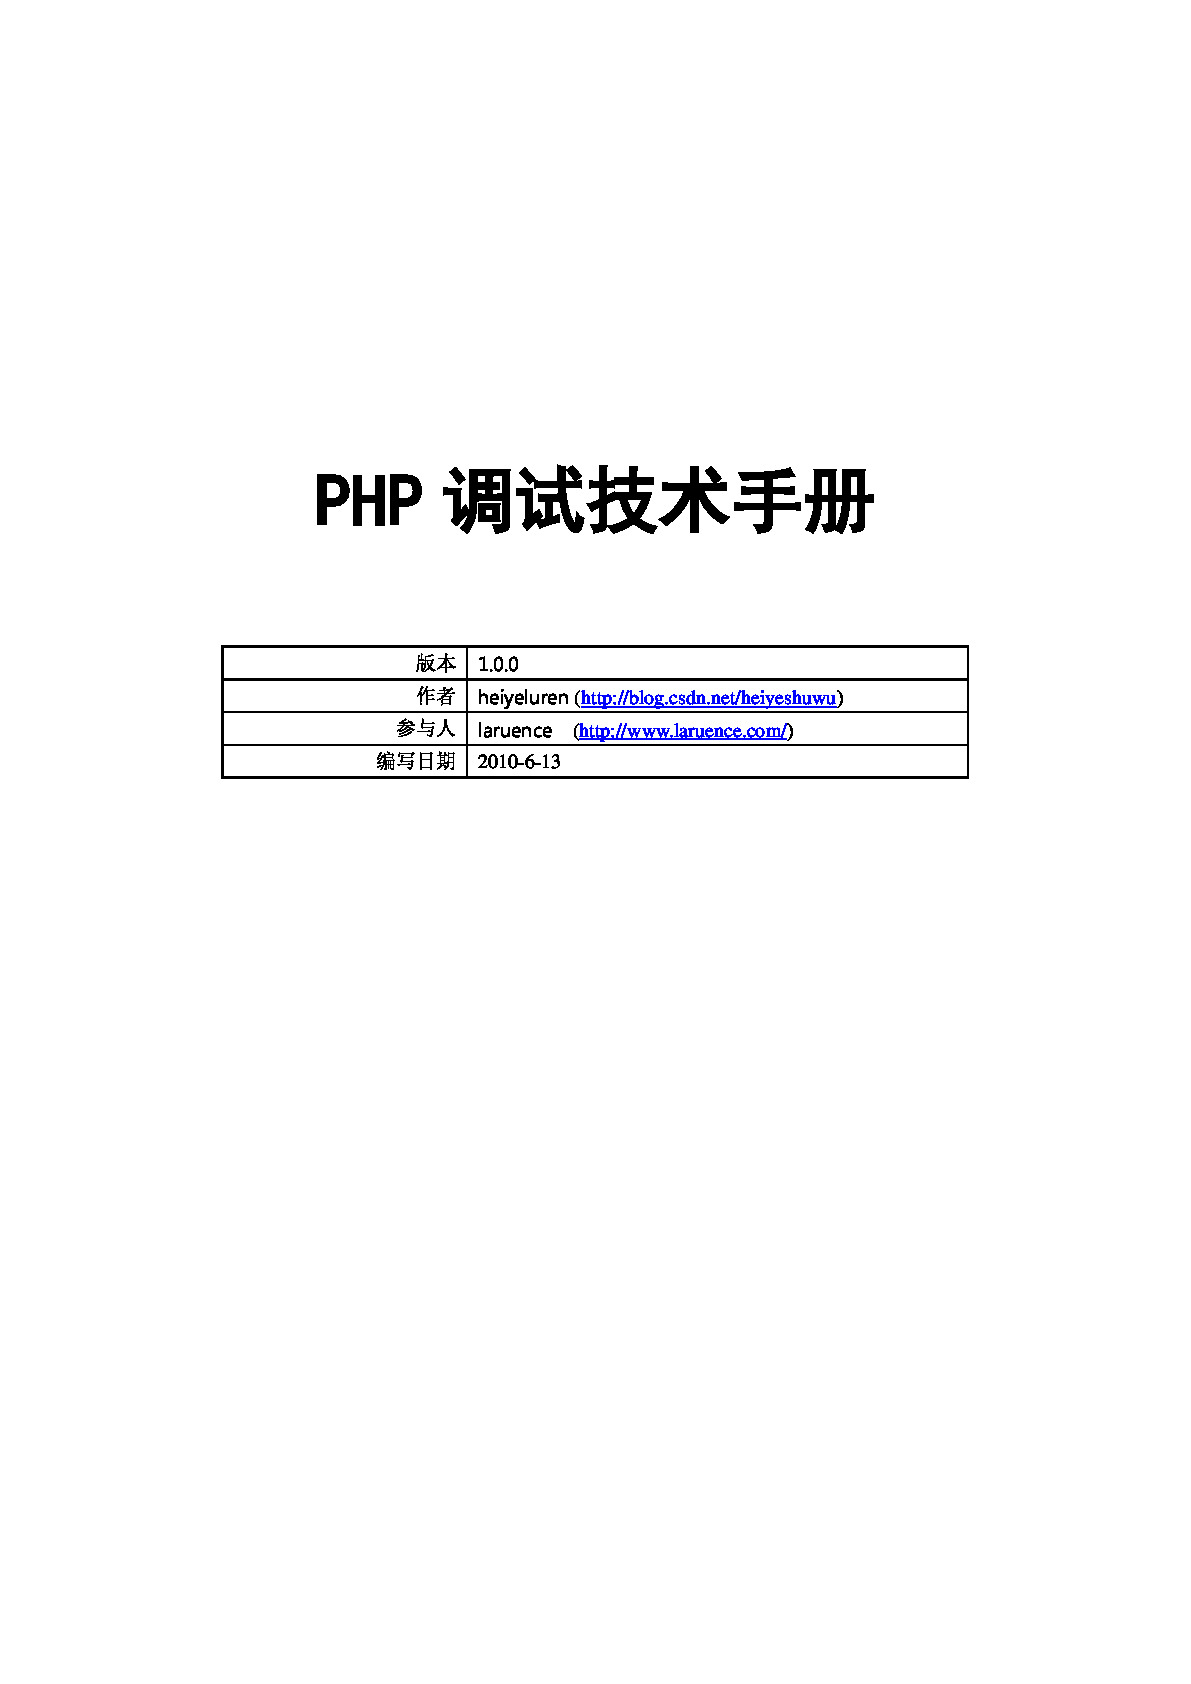 PHP-Debug-Manual-public(链家鸟哥参与)